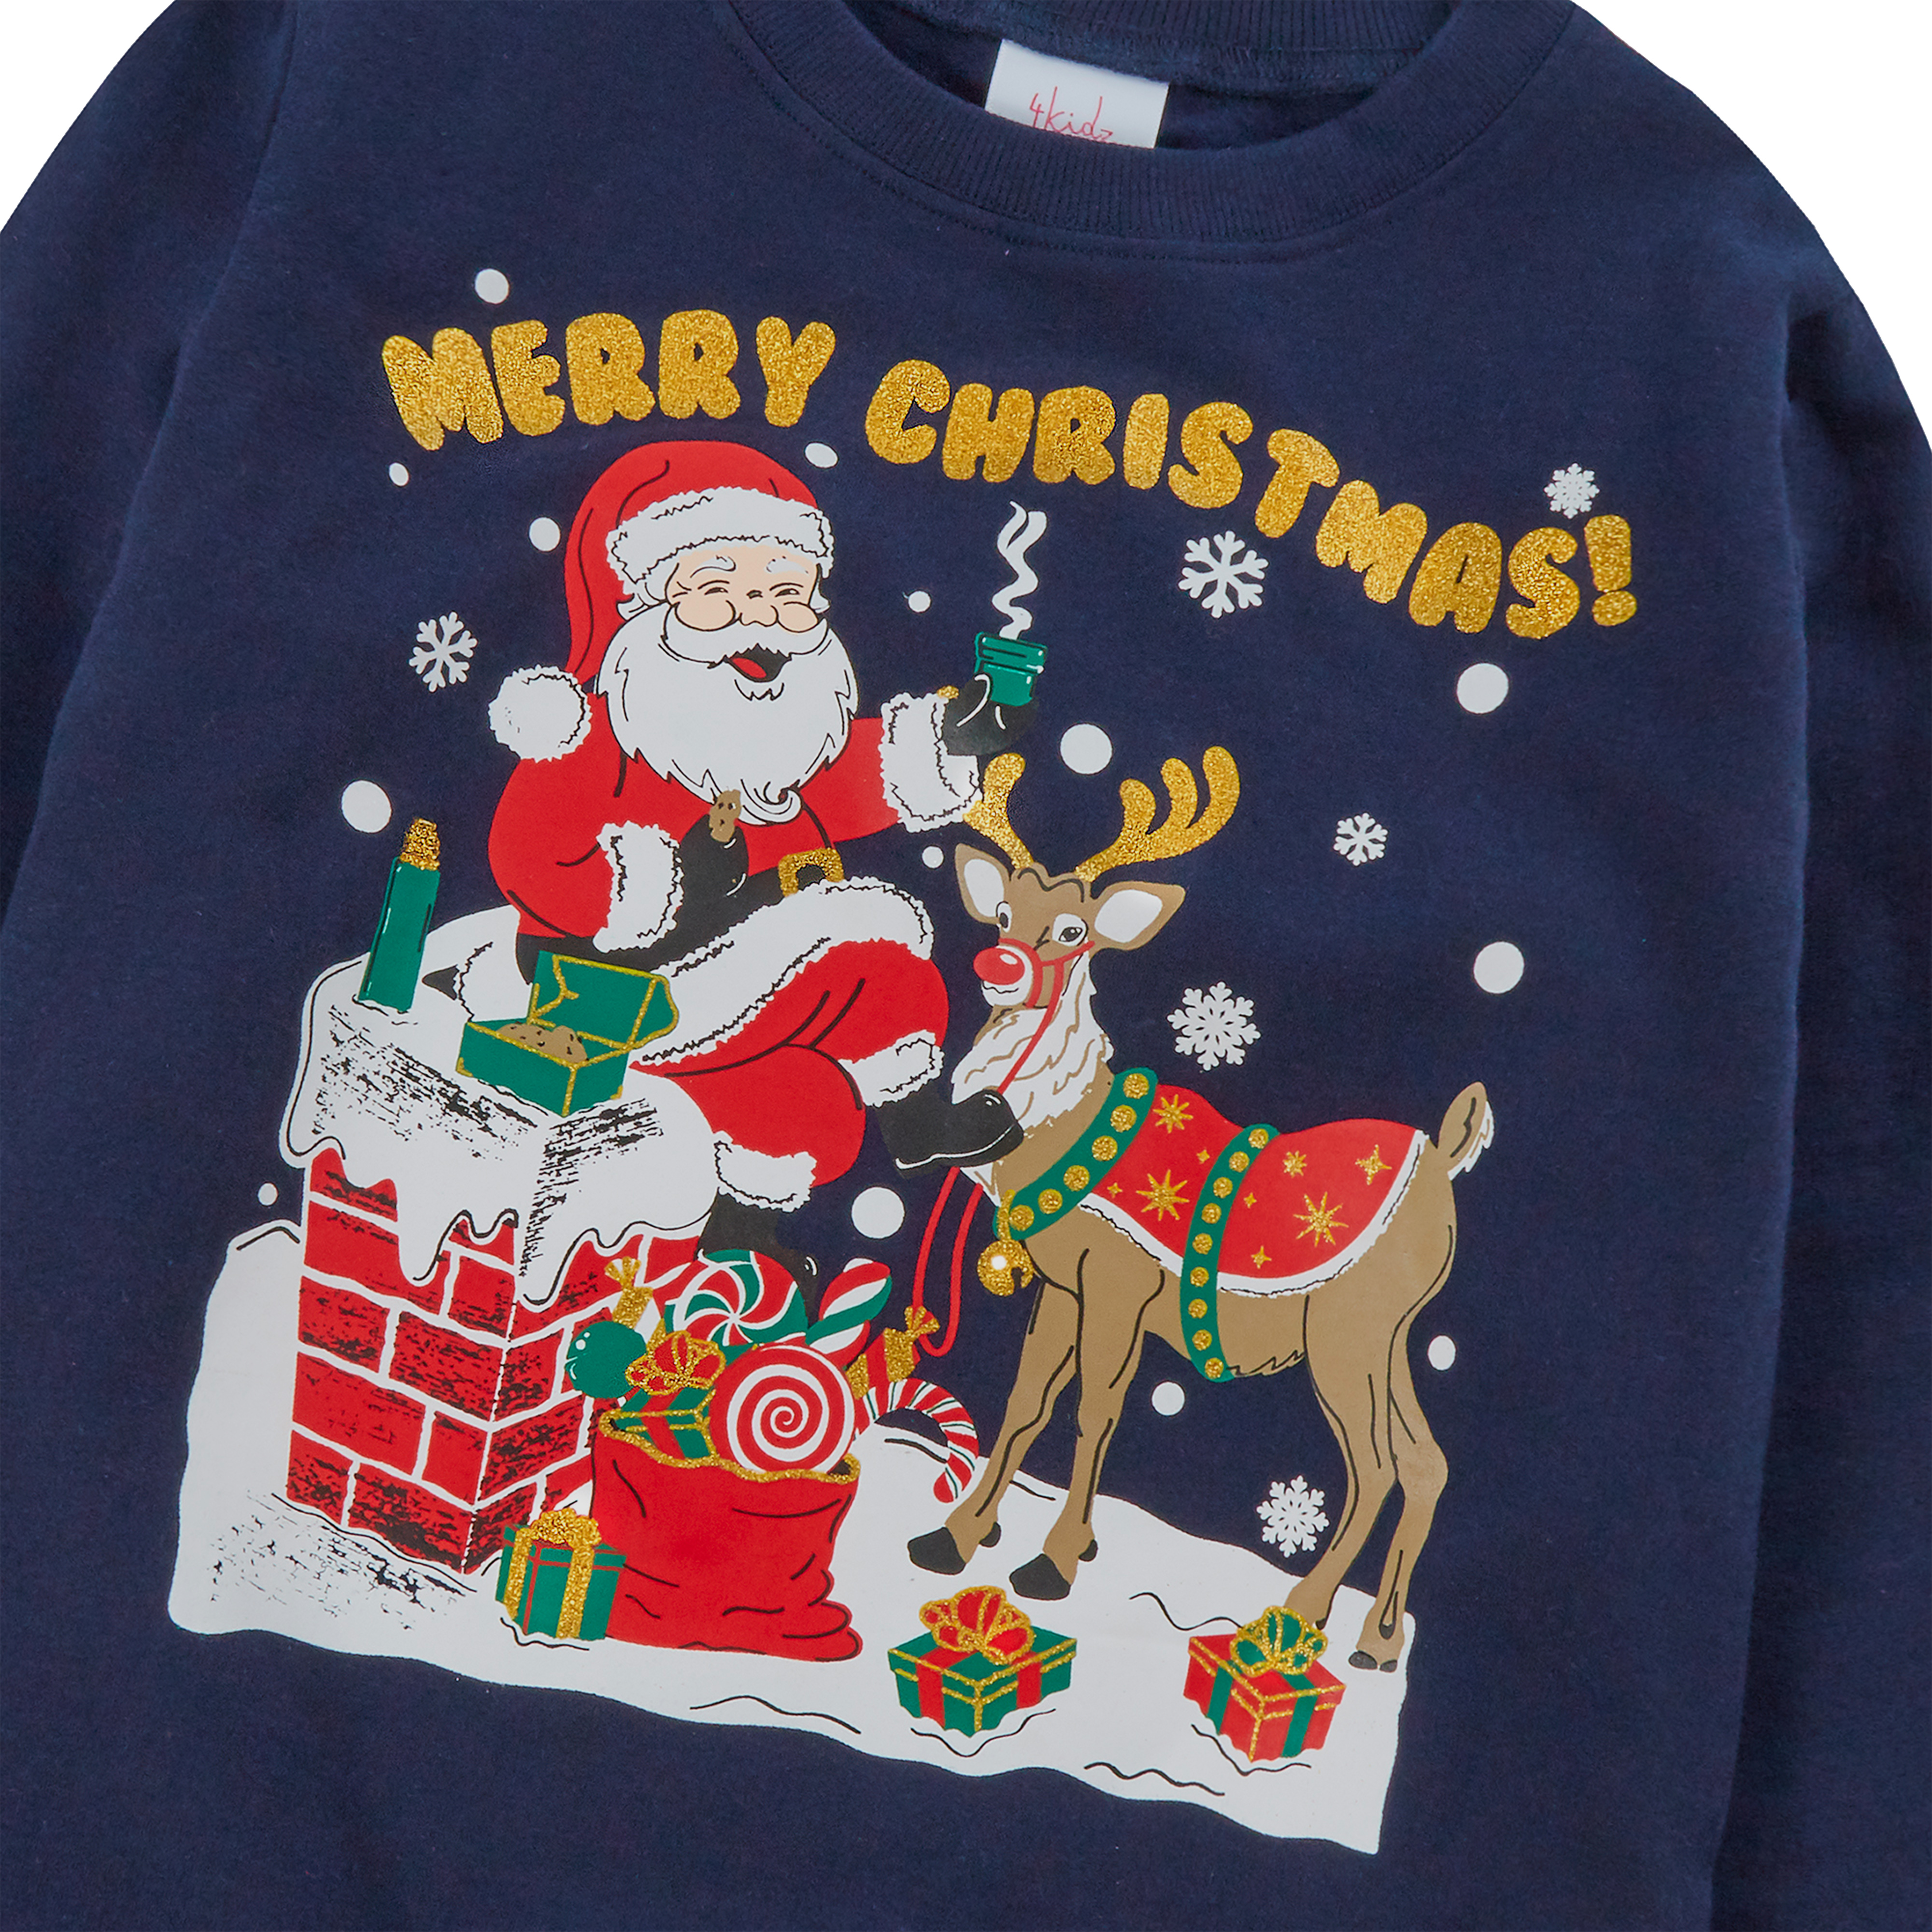 Kids Boys Novelty Funny Christmas Xmas Jumper Santa Claus Knit Sweater Blue Gift